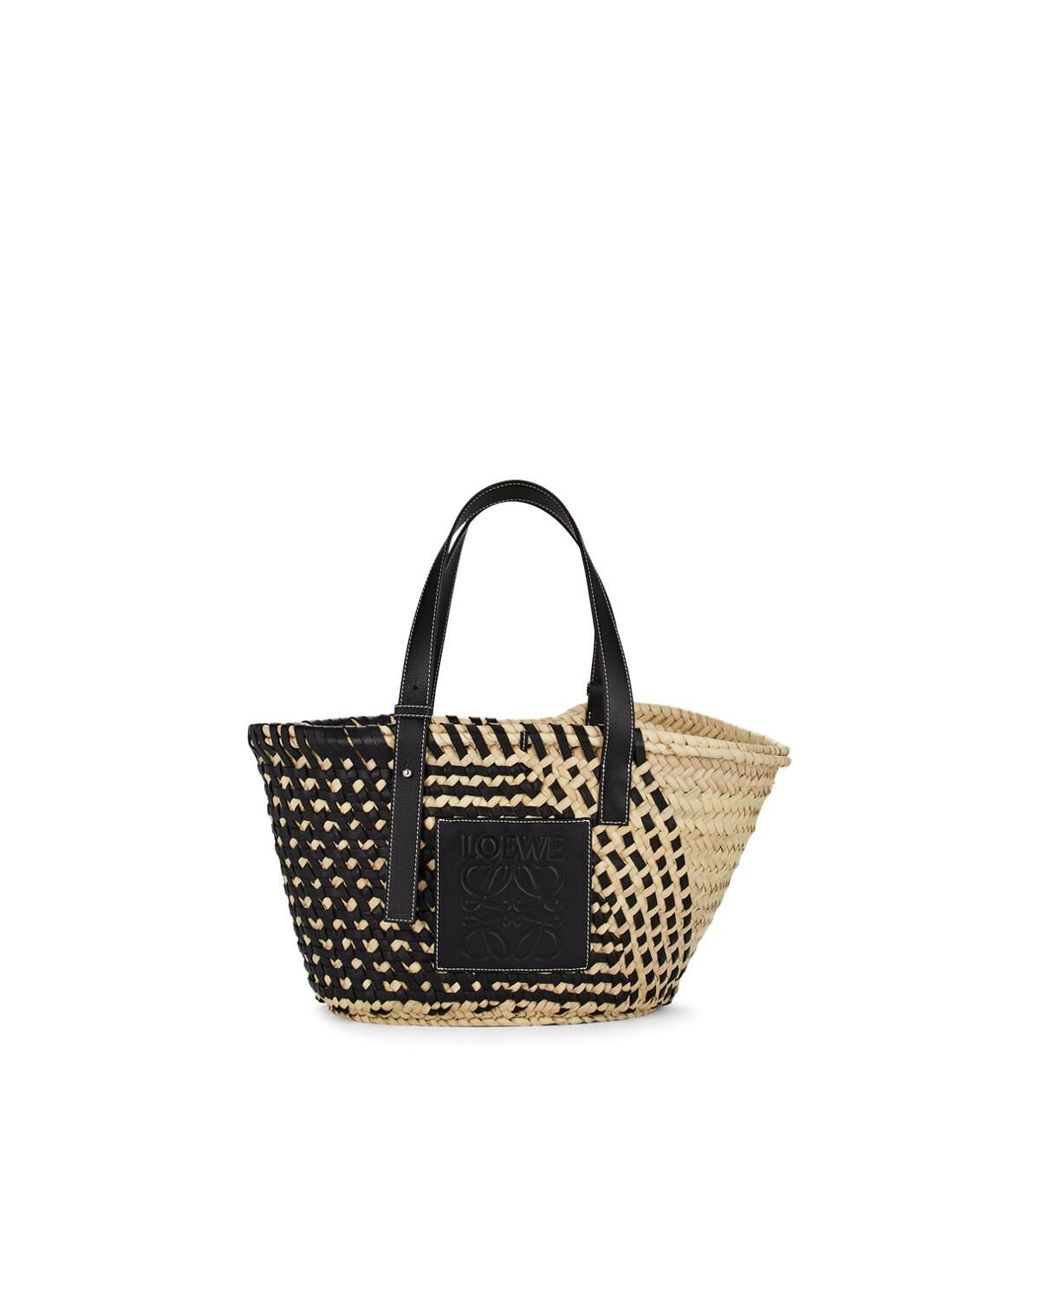 Loewe Medium Raffia & Leather Basket Bag in Black - Lyst